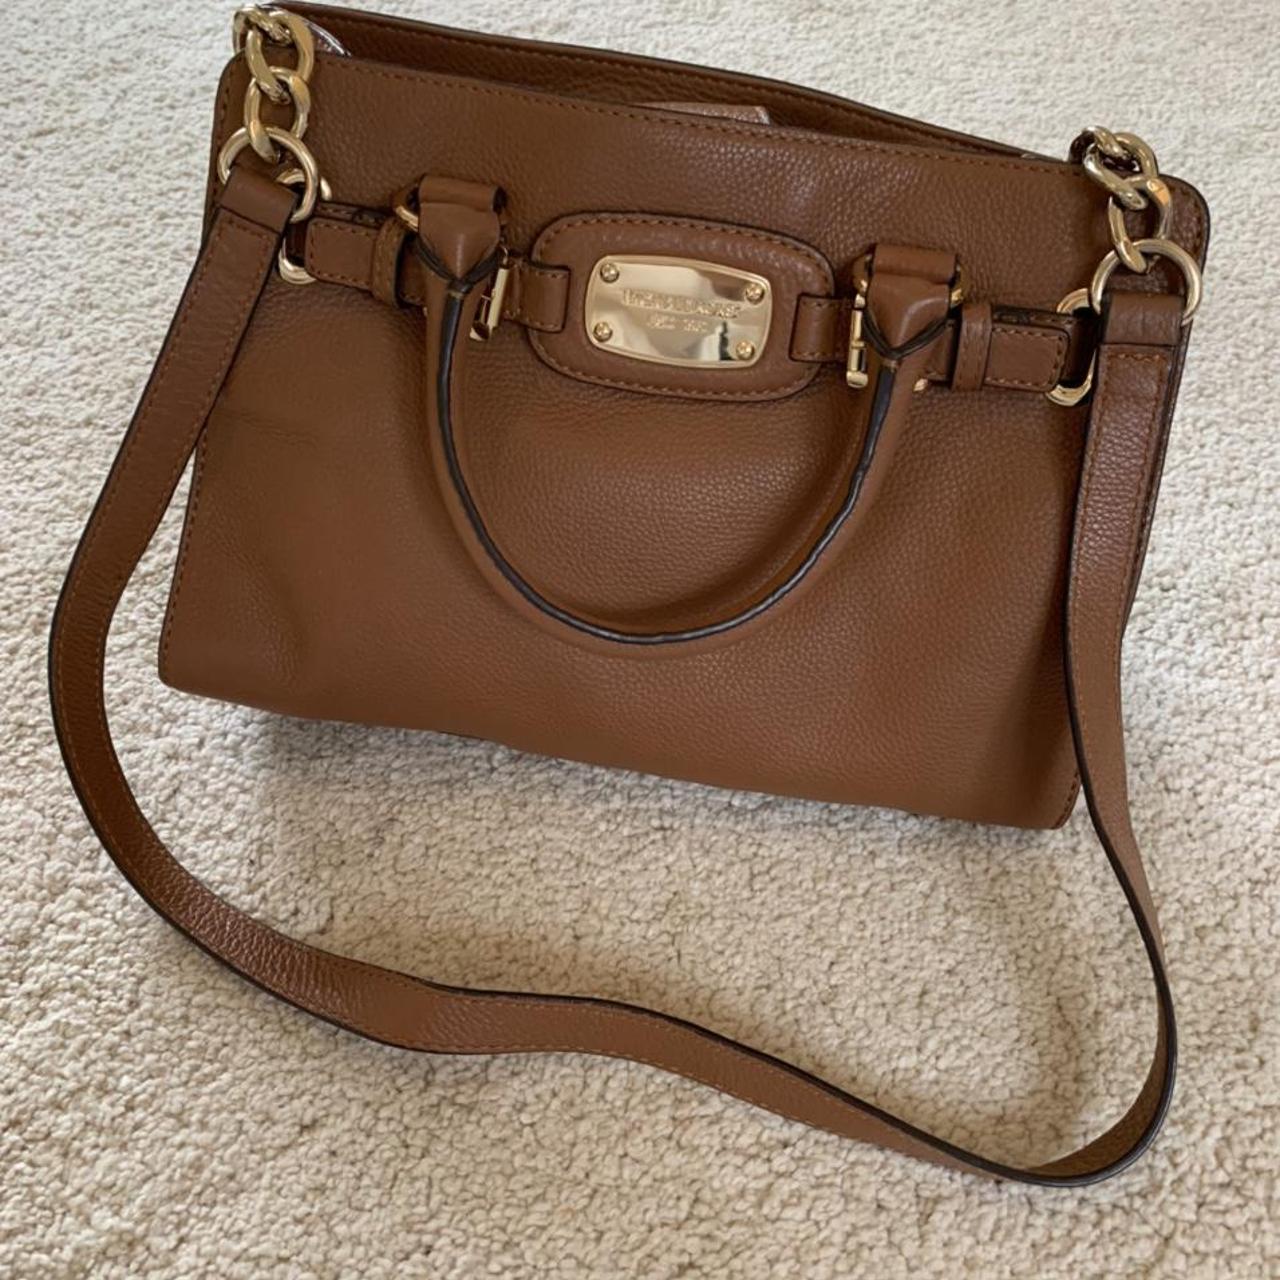 Genuine Michael Kors handbag. Brown leather with... - Depop